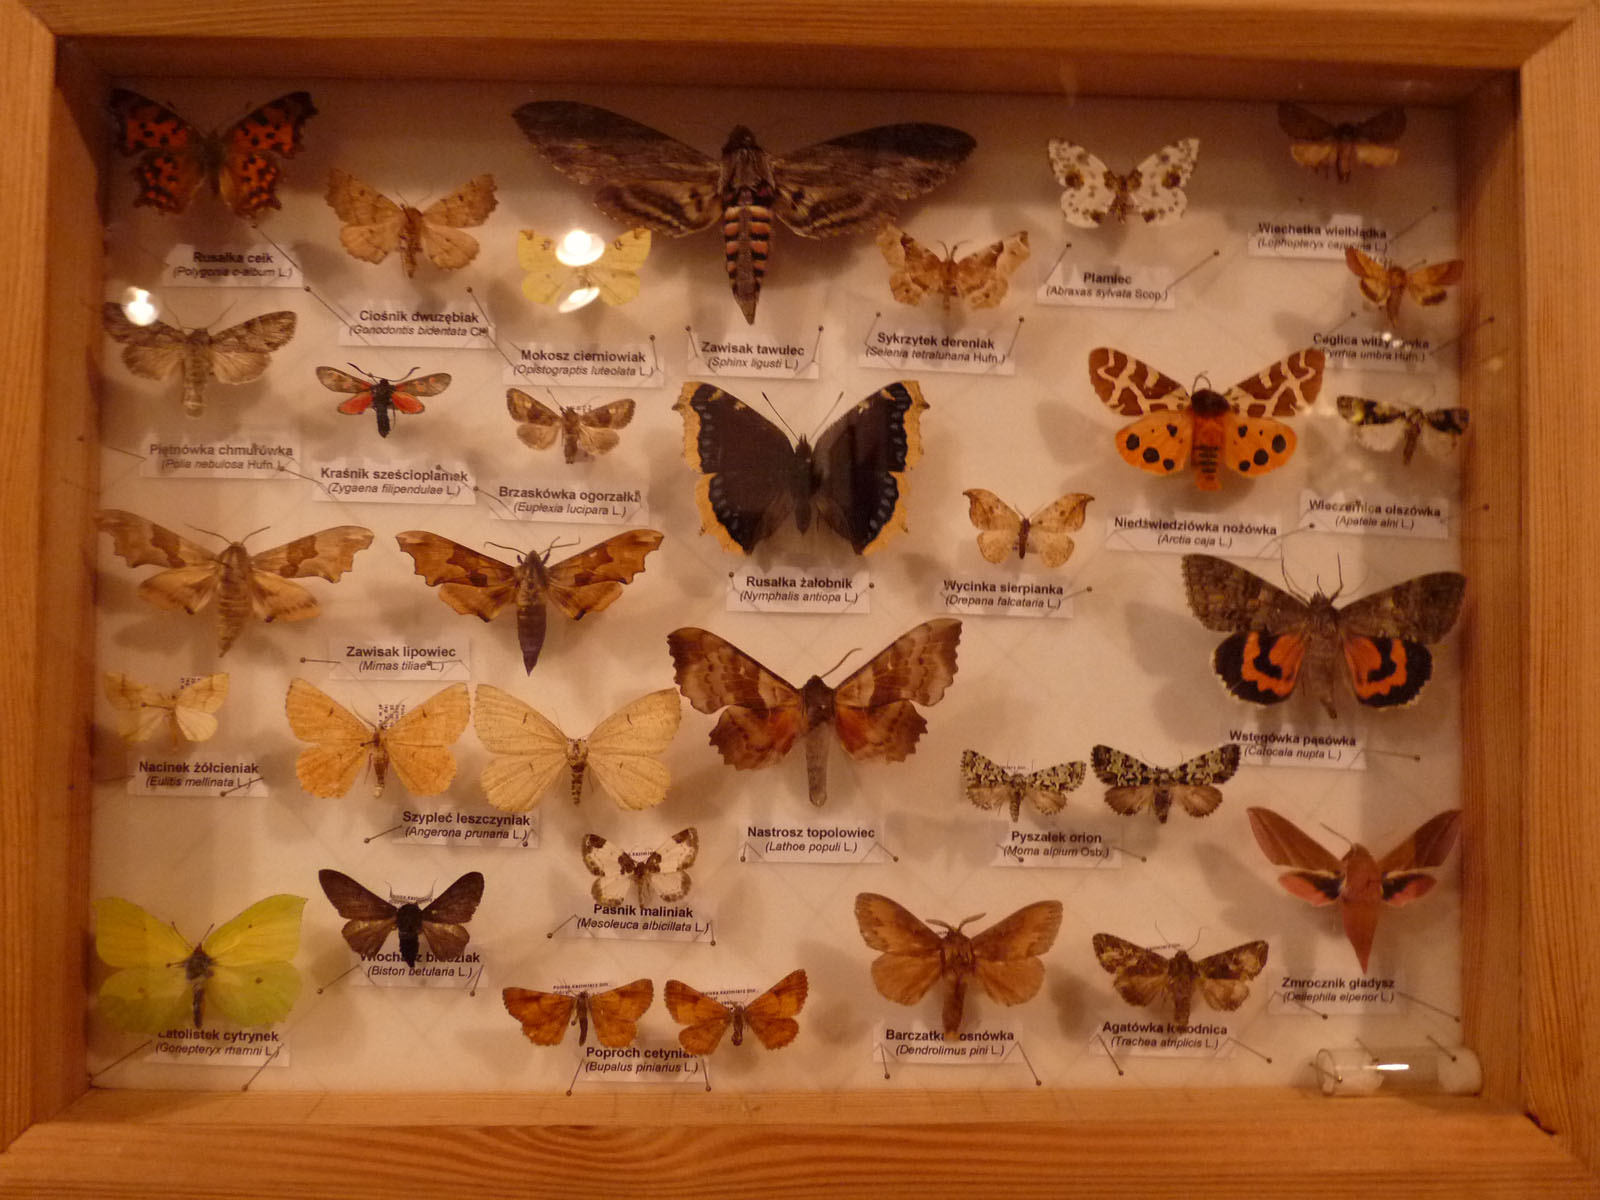 Kolekcja entomologiczna